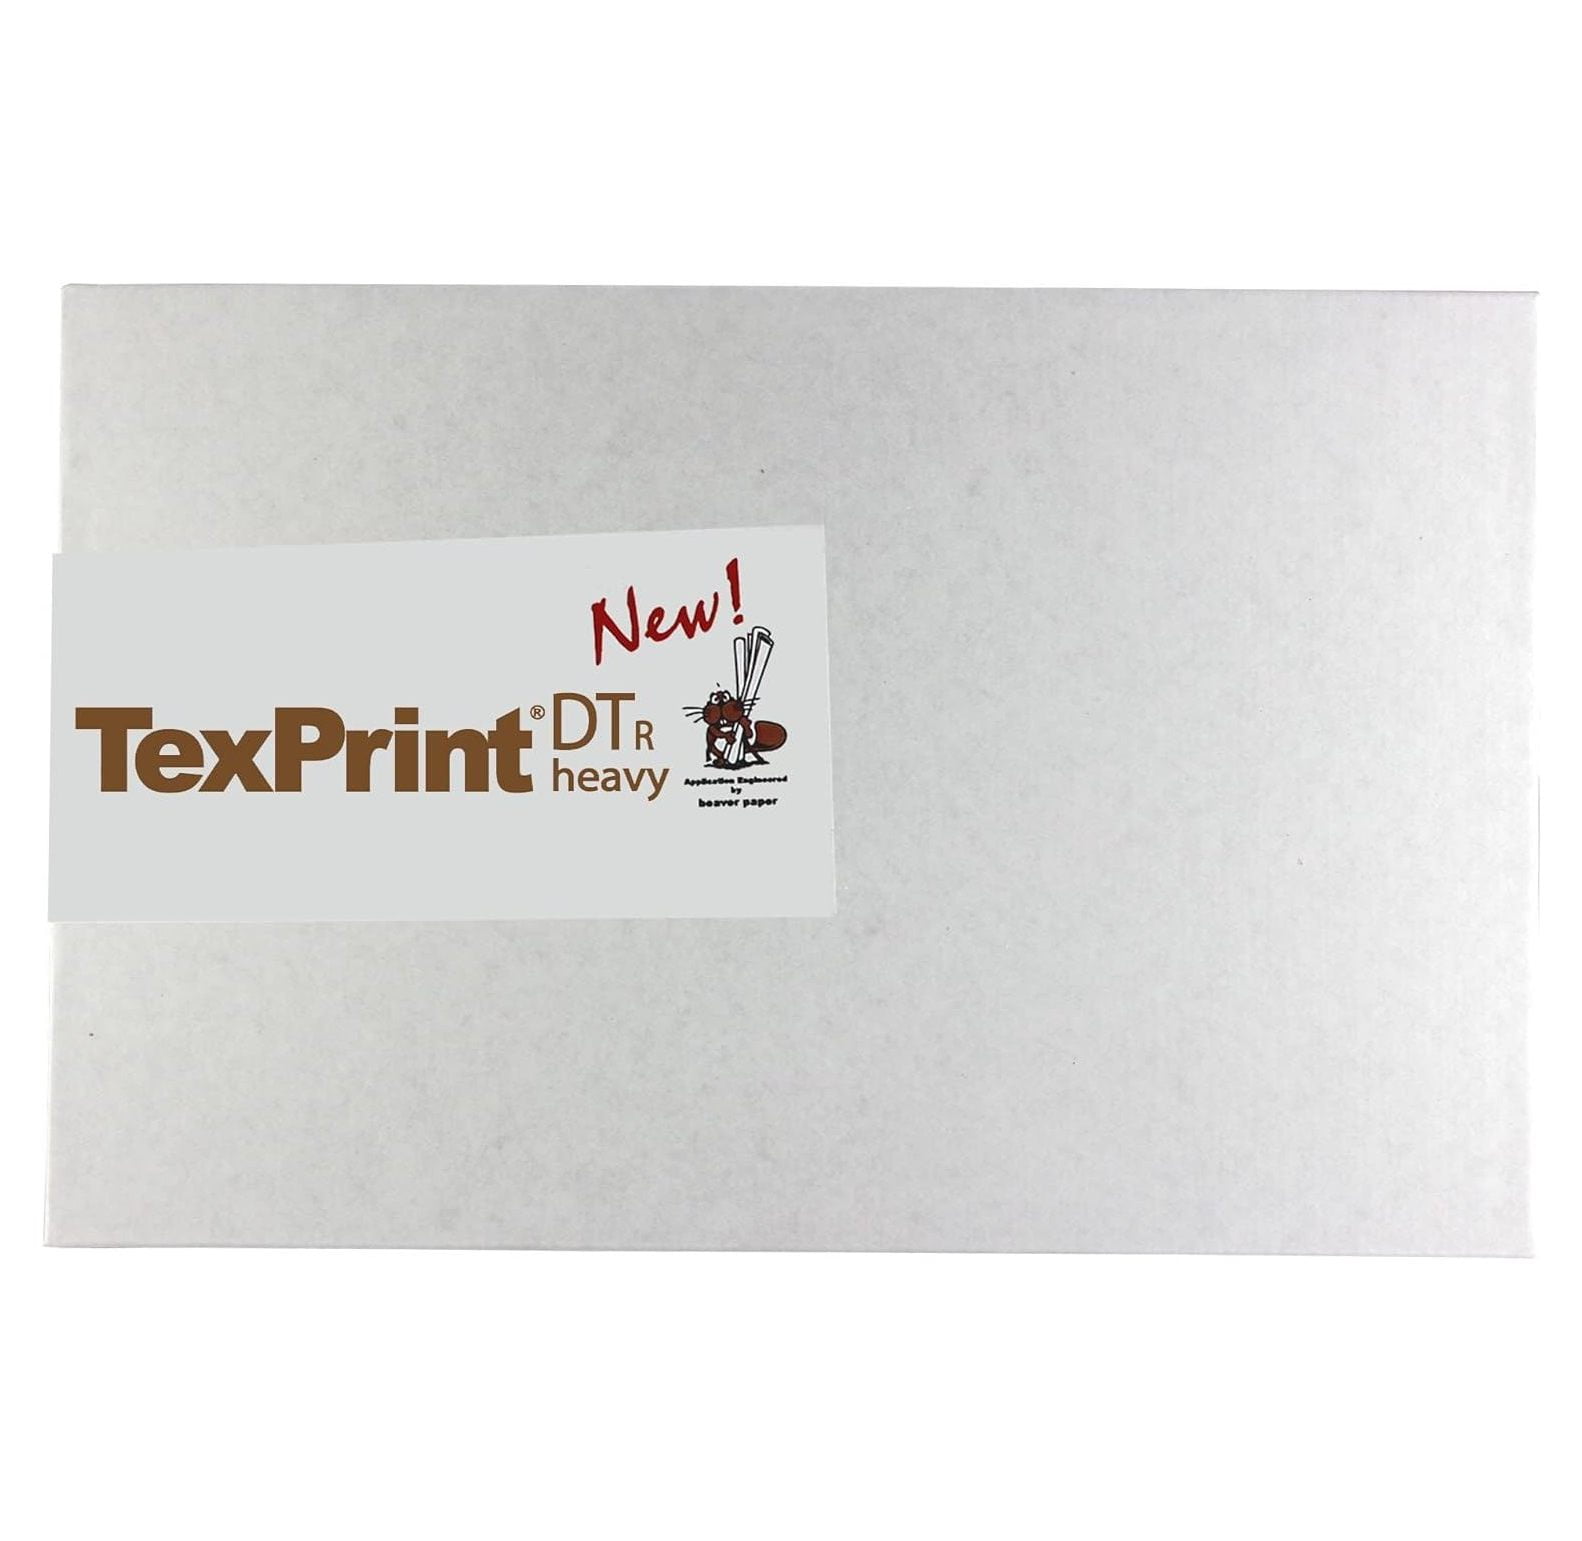 Pen+Gear Fabric Transfer Paper, for Light & Dark Fabrics, Inkjet Printable,  8.5 x 11, 45 Sheets - Walmart.com